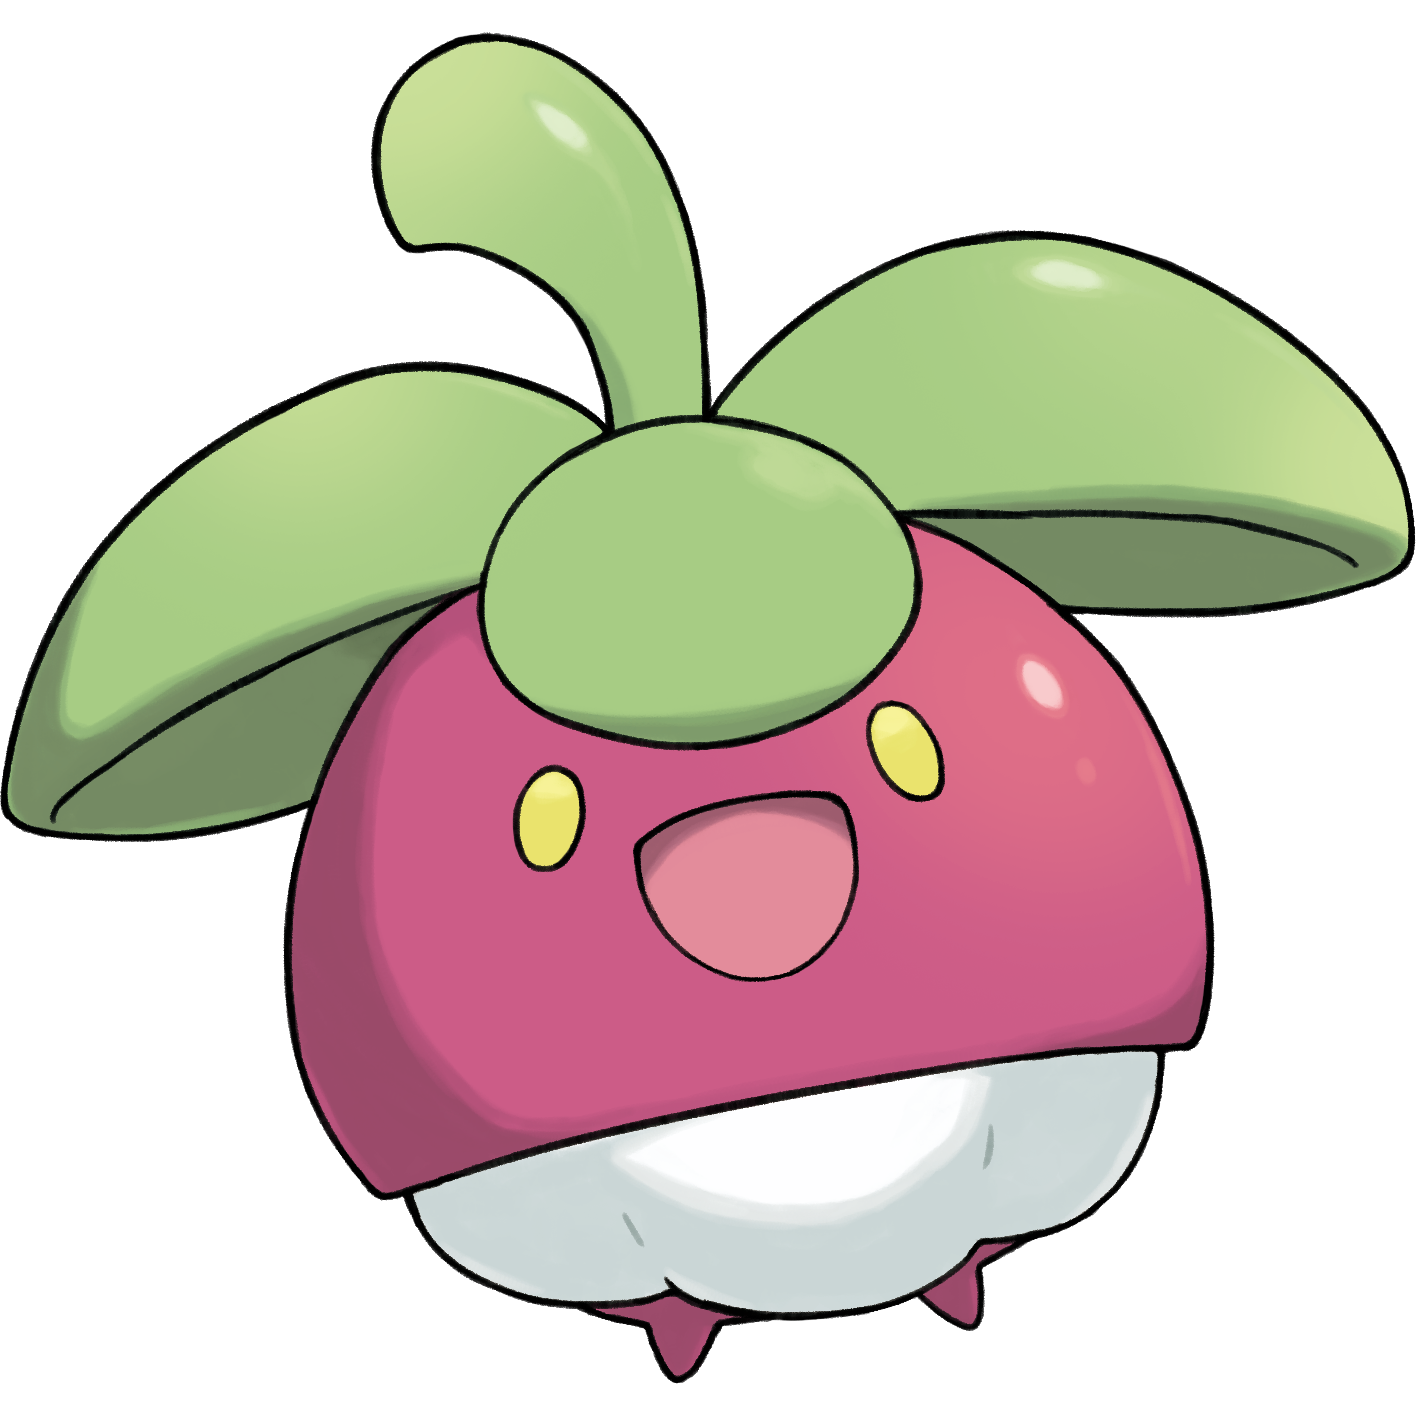 Grass Knot (move) - Bulbapedia, the community-driven Pokémon encyclopedia